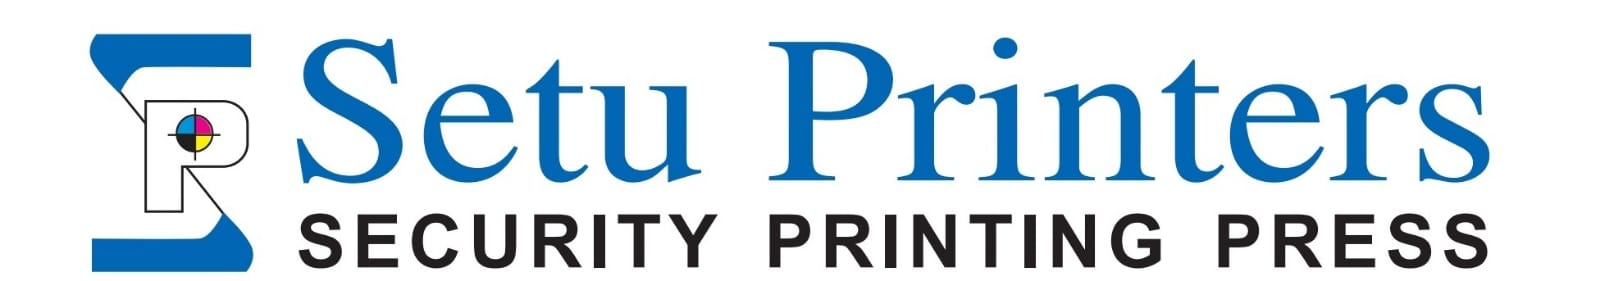 setu printers logo